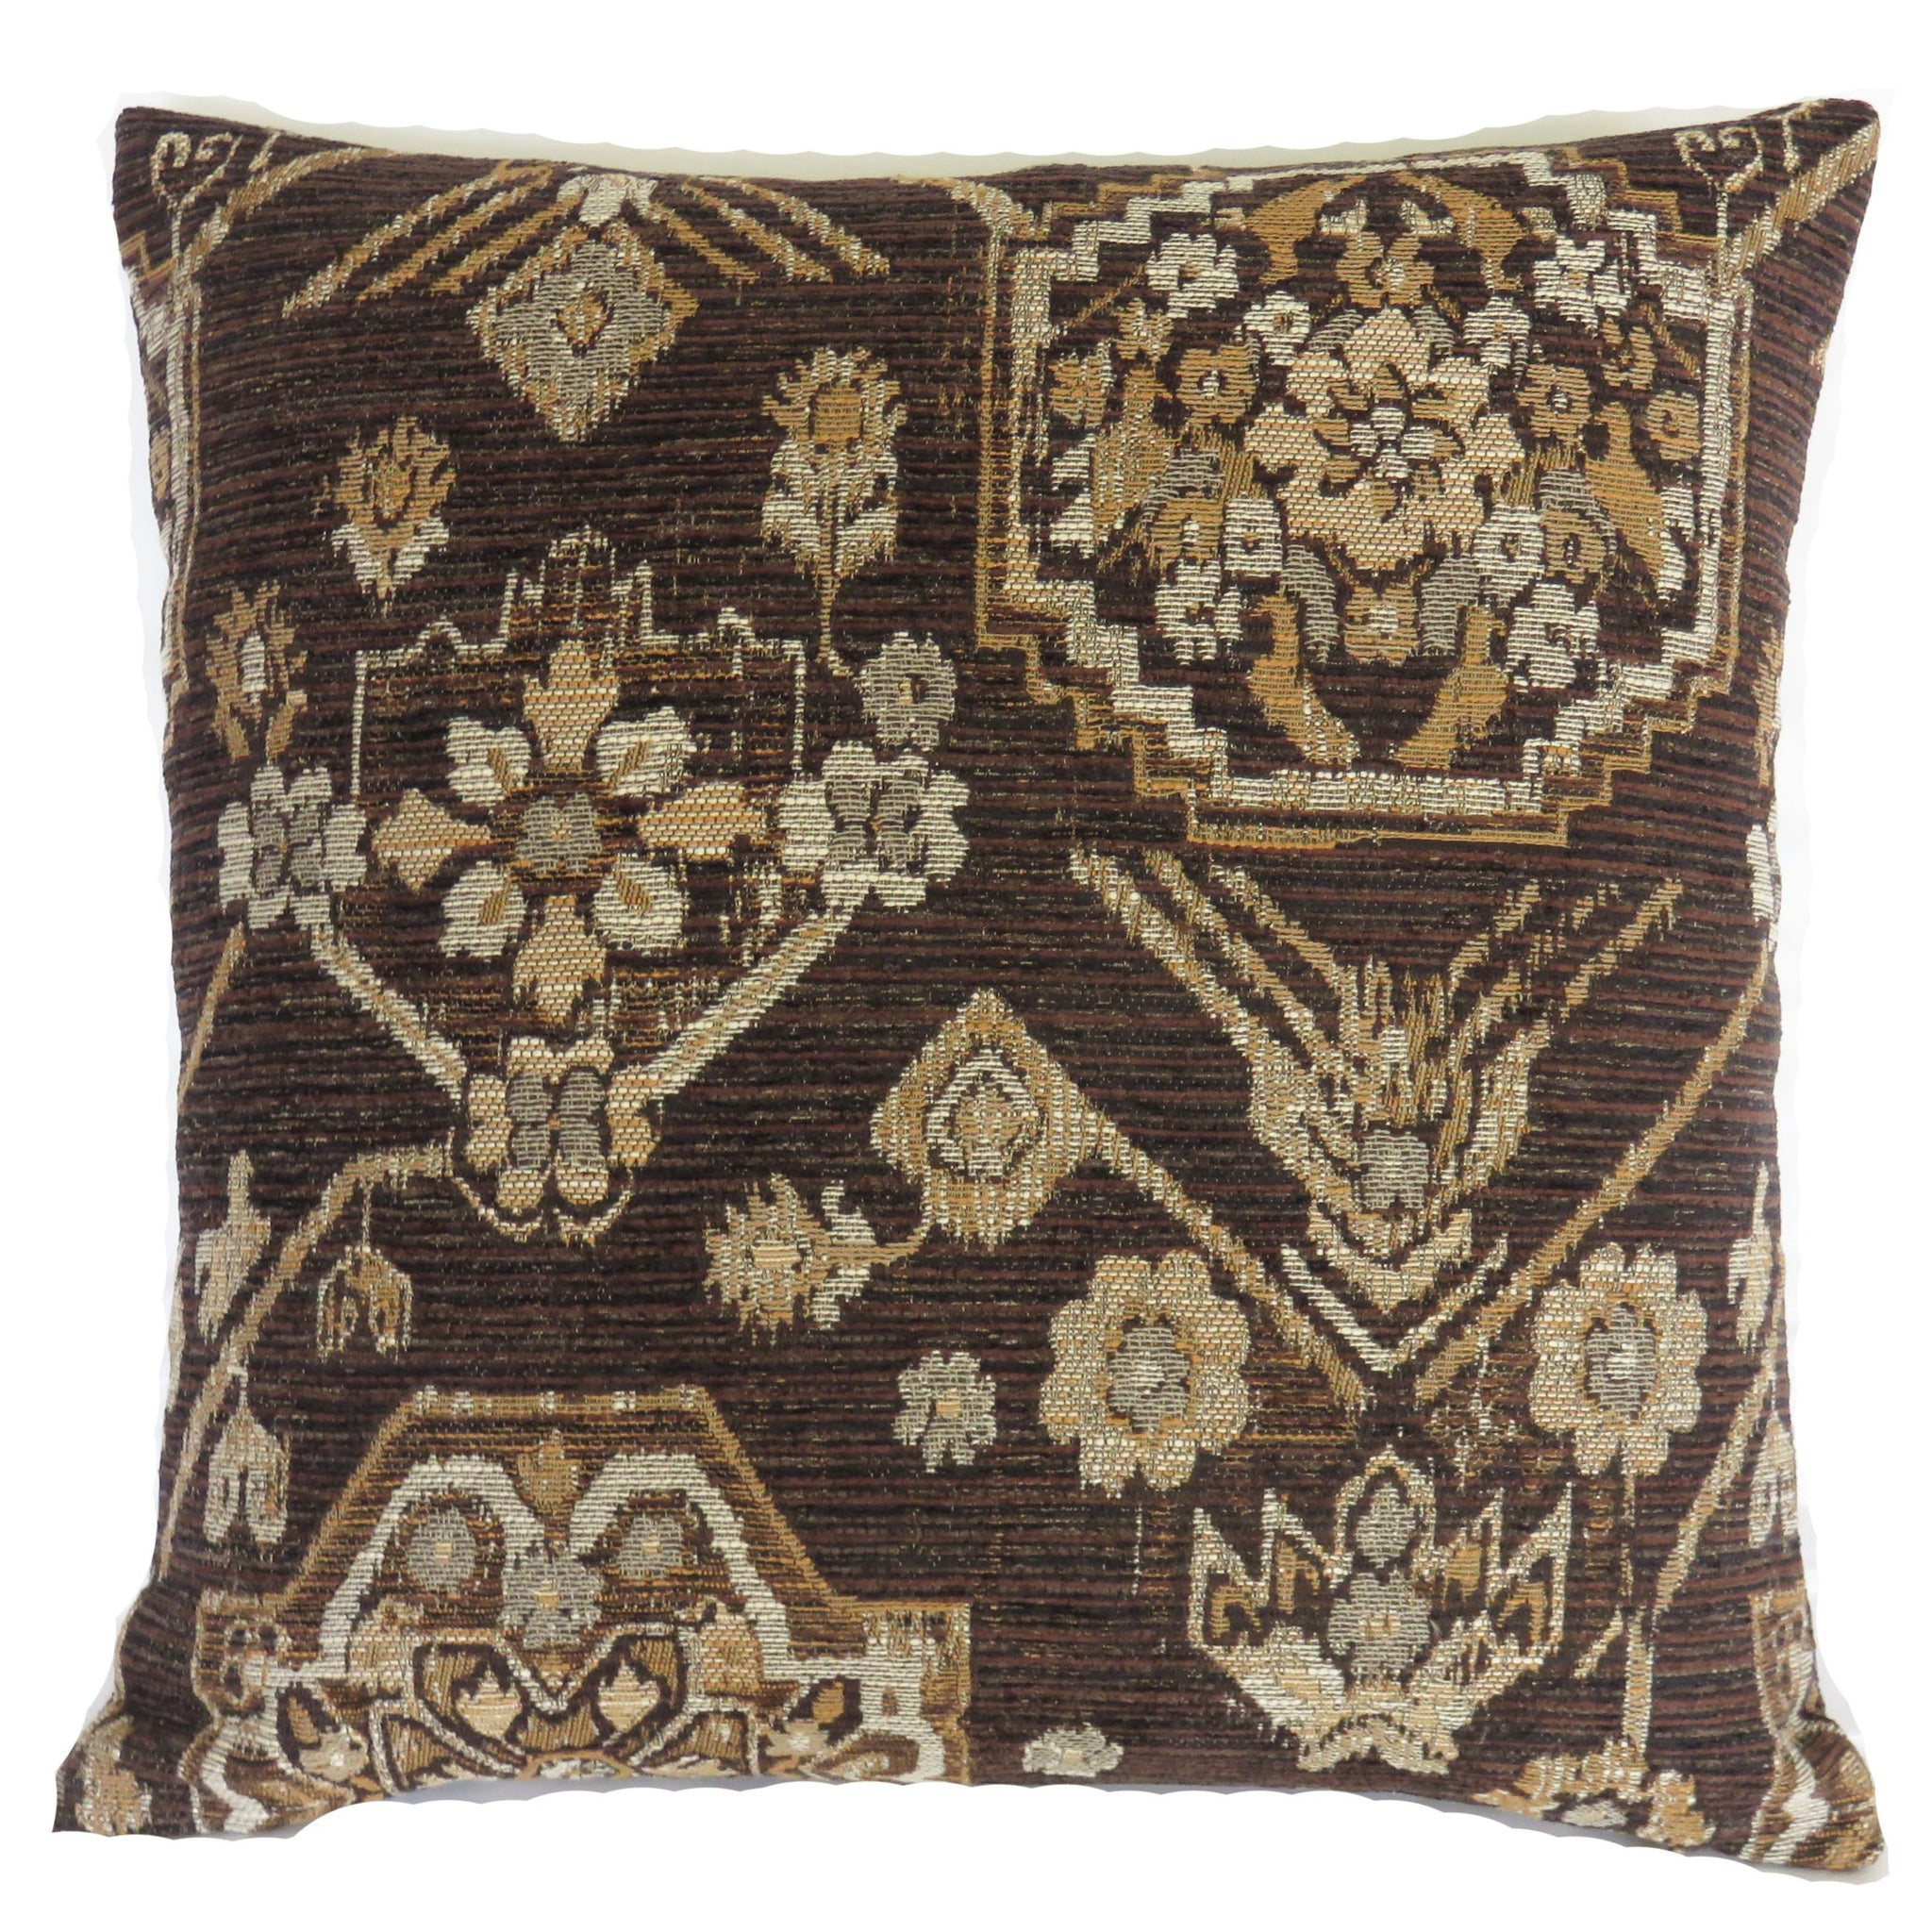 Dark Brown Kilim Motif Pillow Cover, 17" - 18" Square, Tan, Black, Gold, Grey Chenille